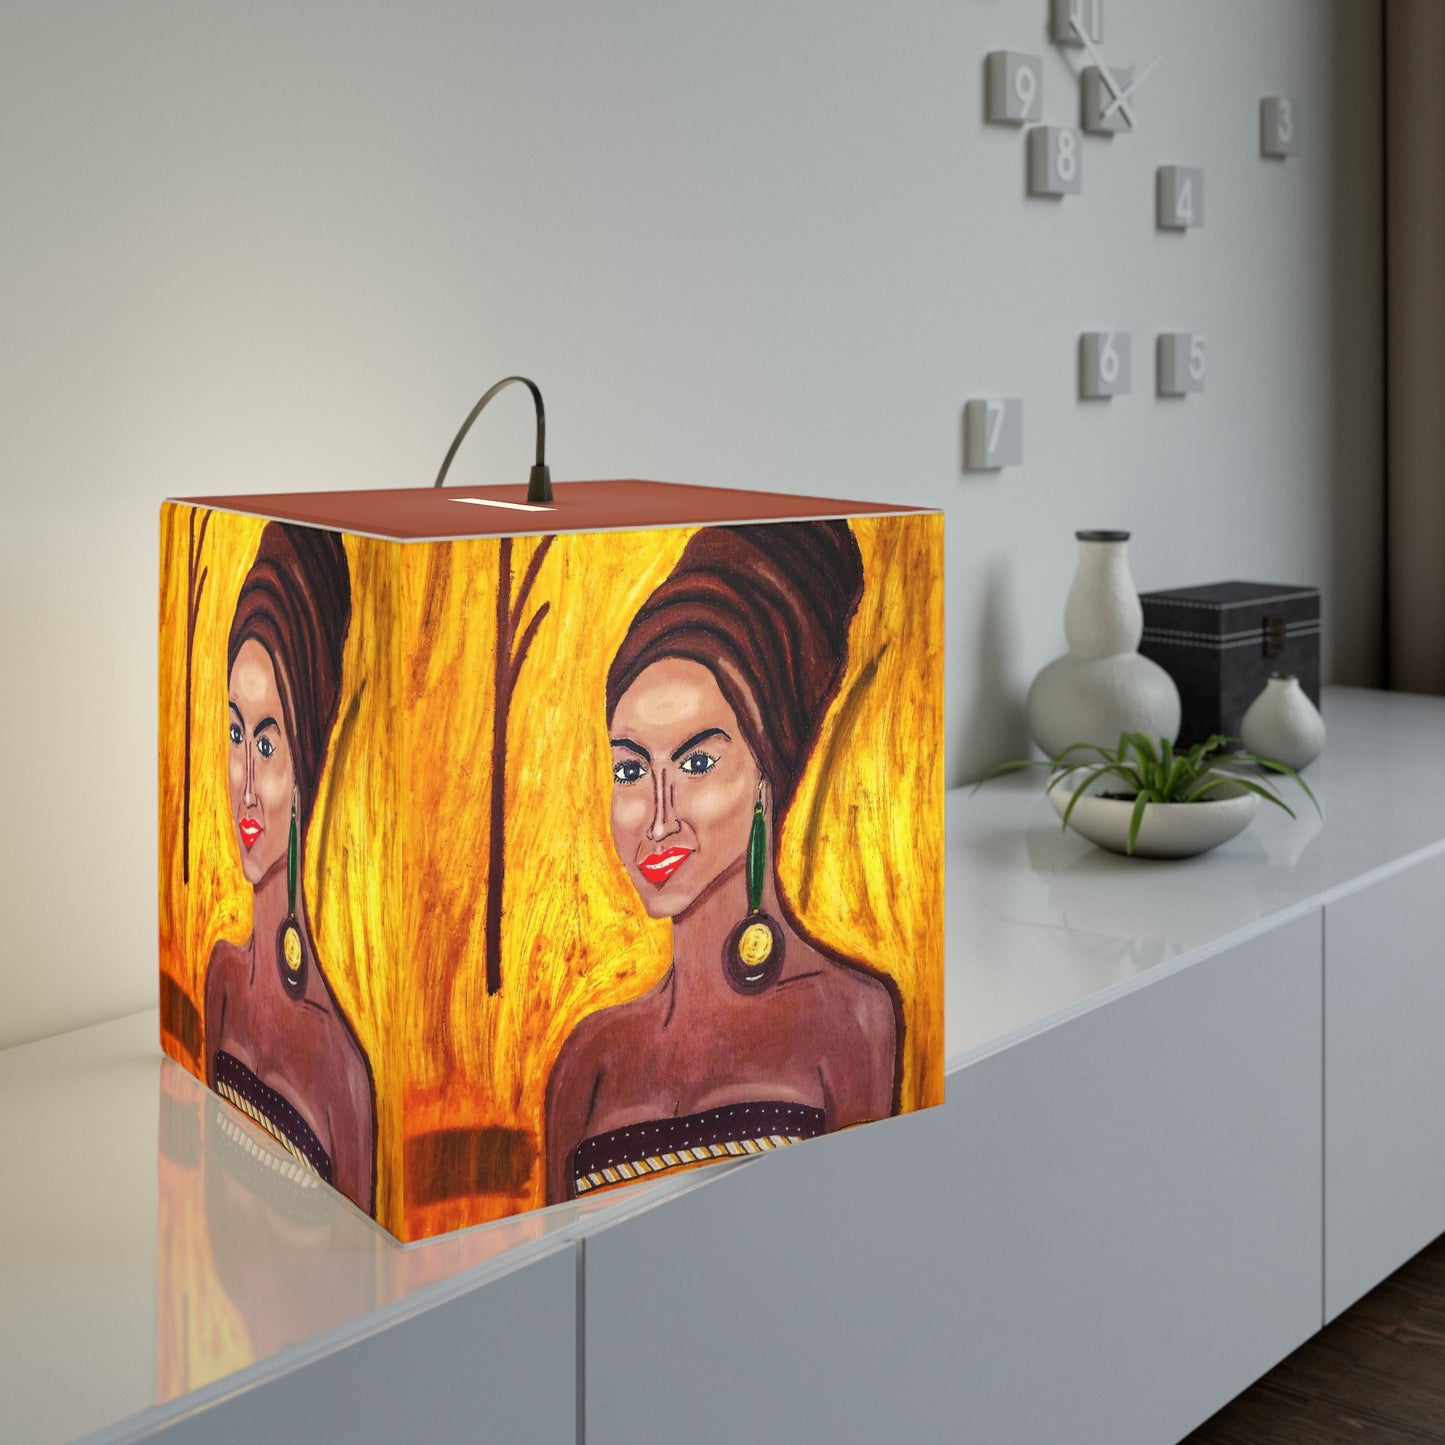 Stylish Desert Orange Light Cube Lamp